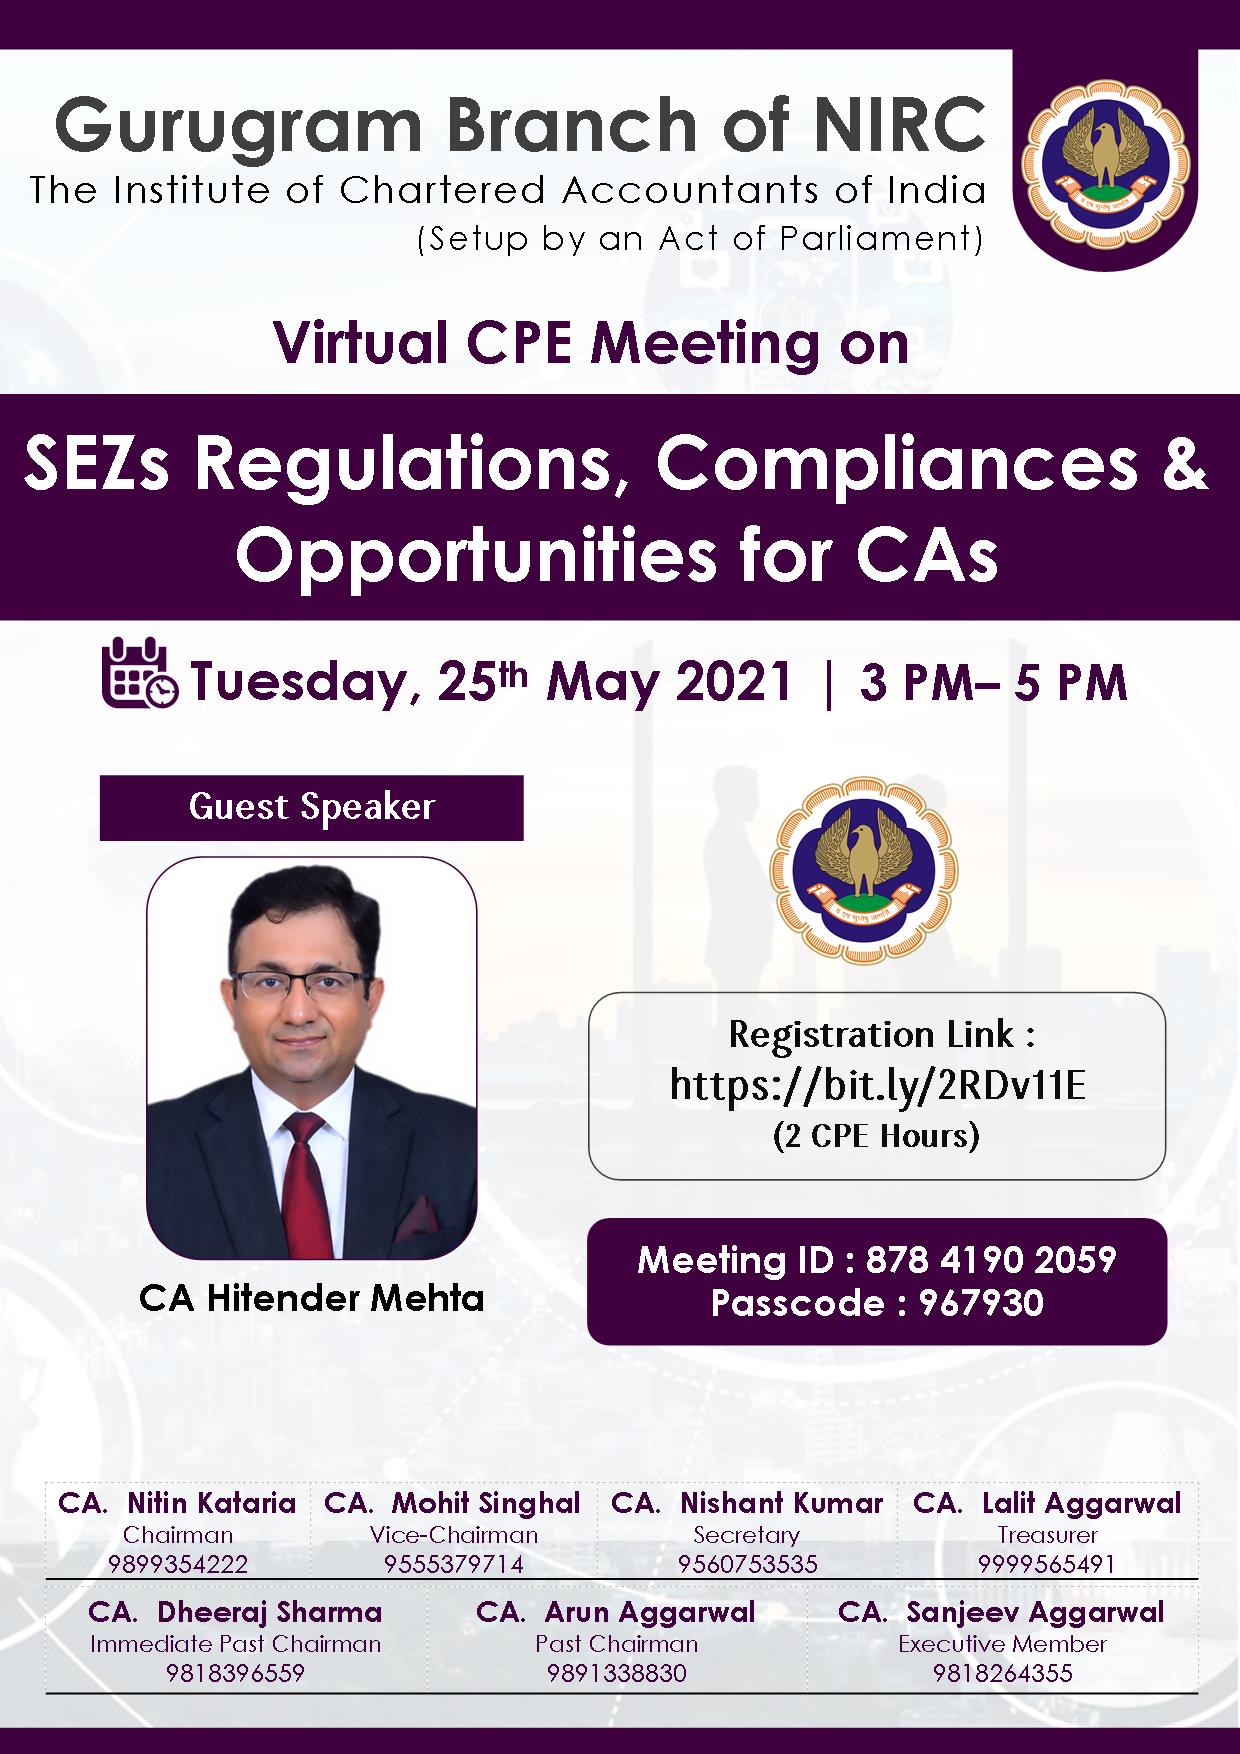 VCM on SEZs Regulations, Compliances & Opportunities for CAs